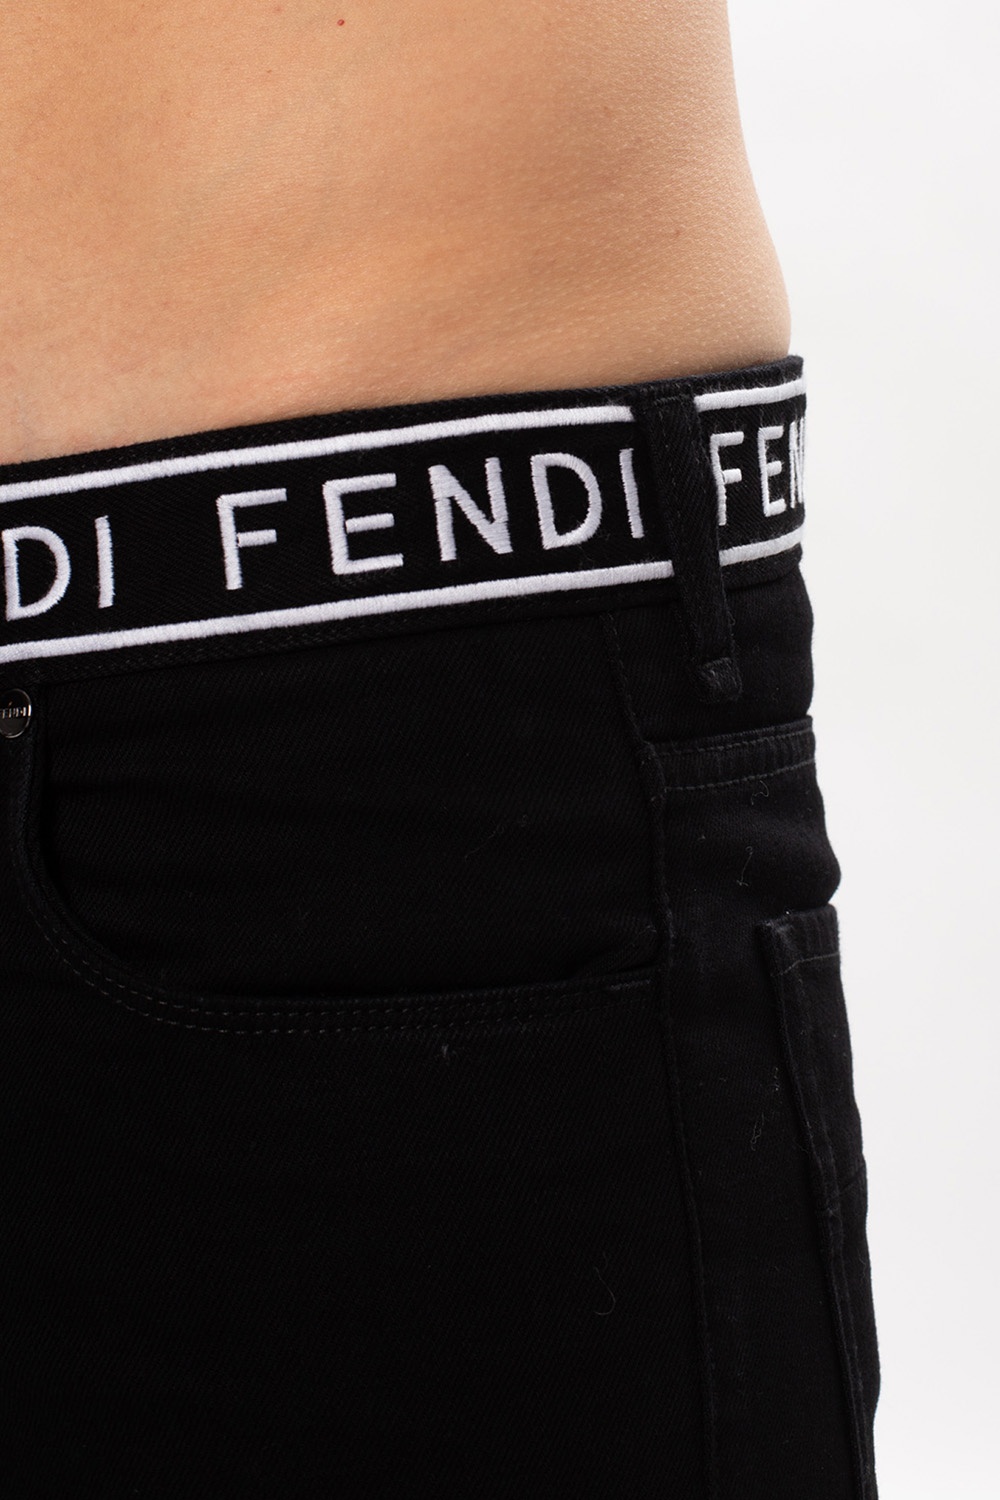 Fendi Jeans with logo